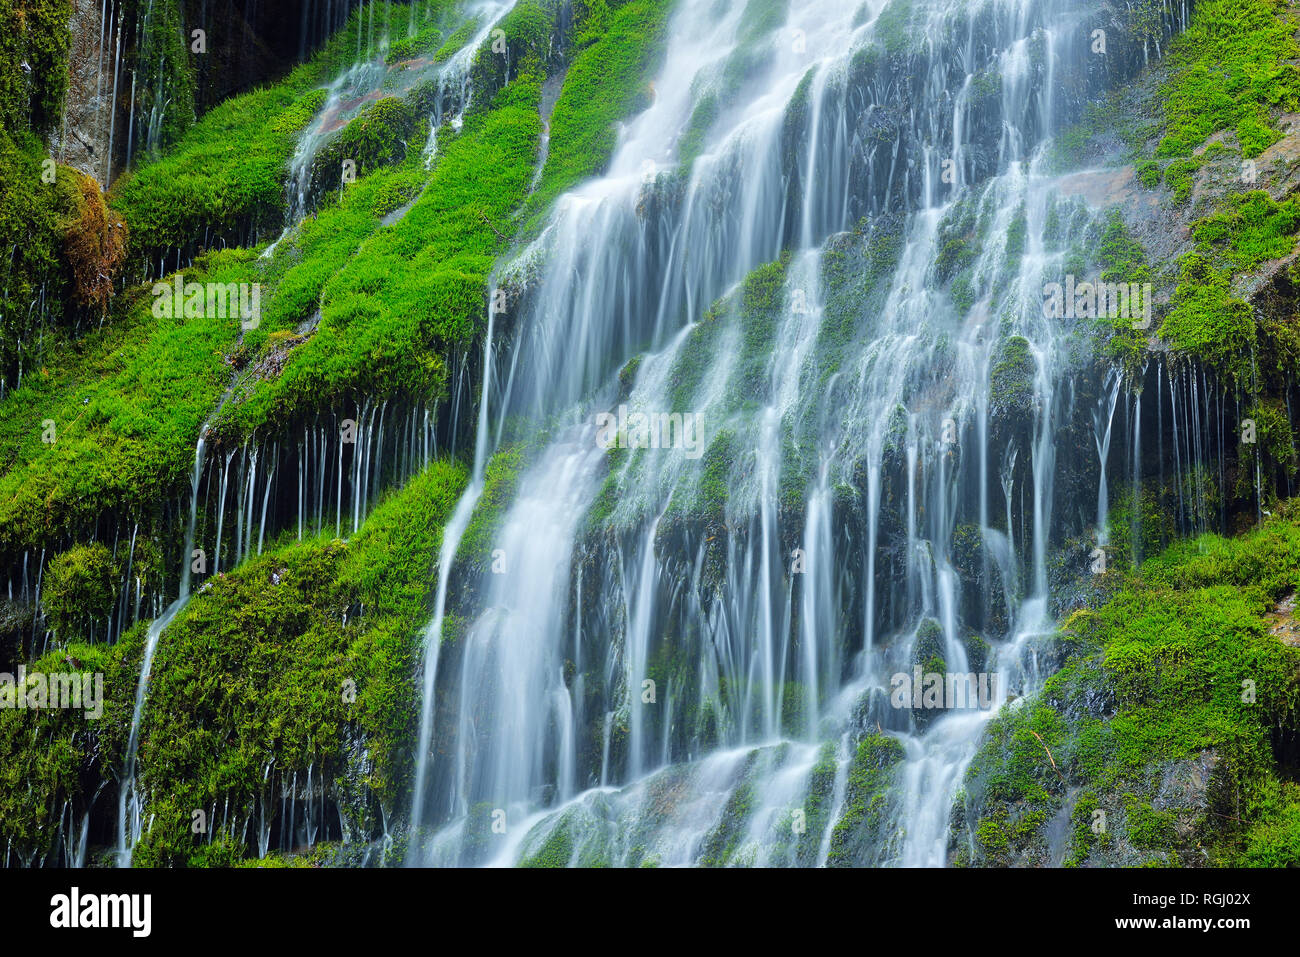 Water cascades down the cliffs of the famous Wimbachklamm, Berchtesgaden National Park, Bavaria, Germany Stock Photo